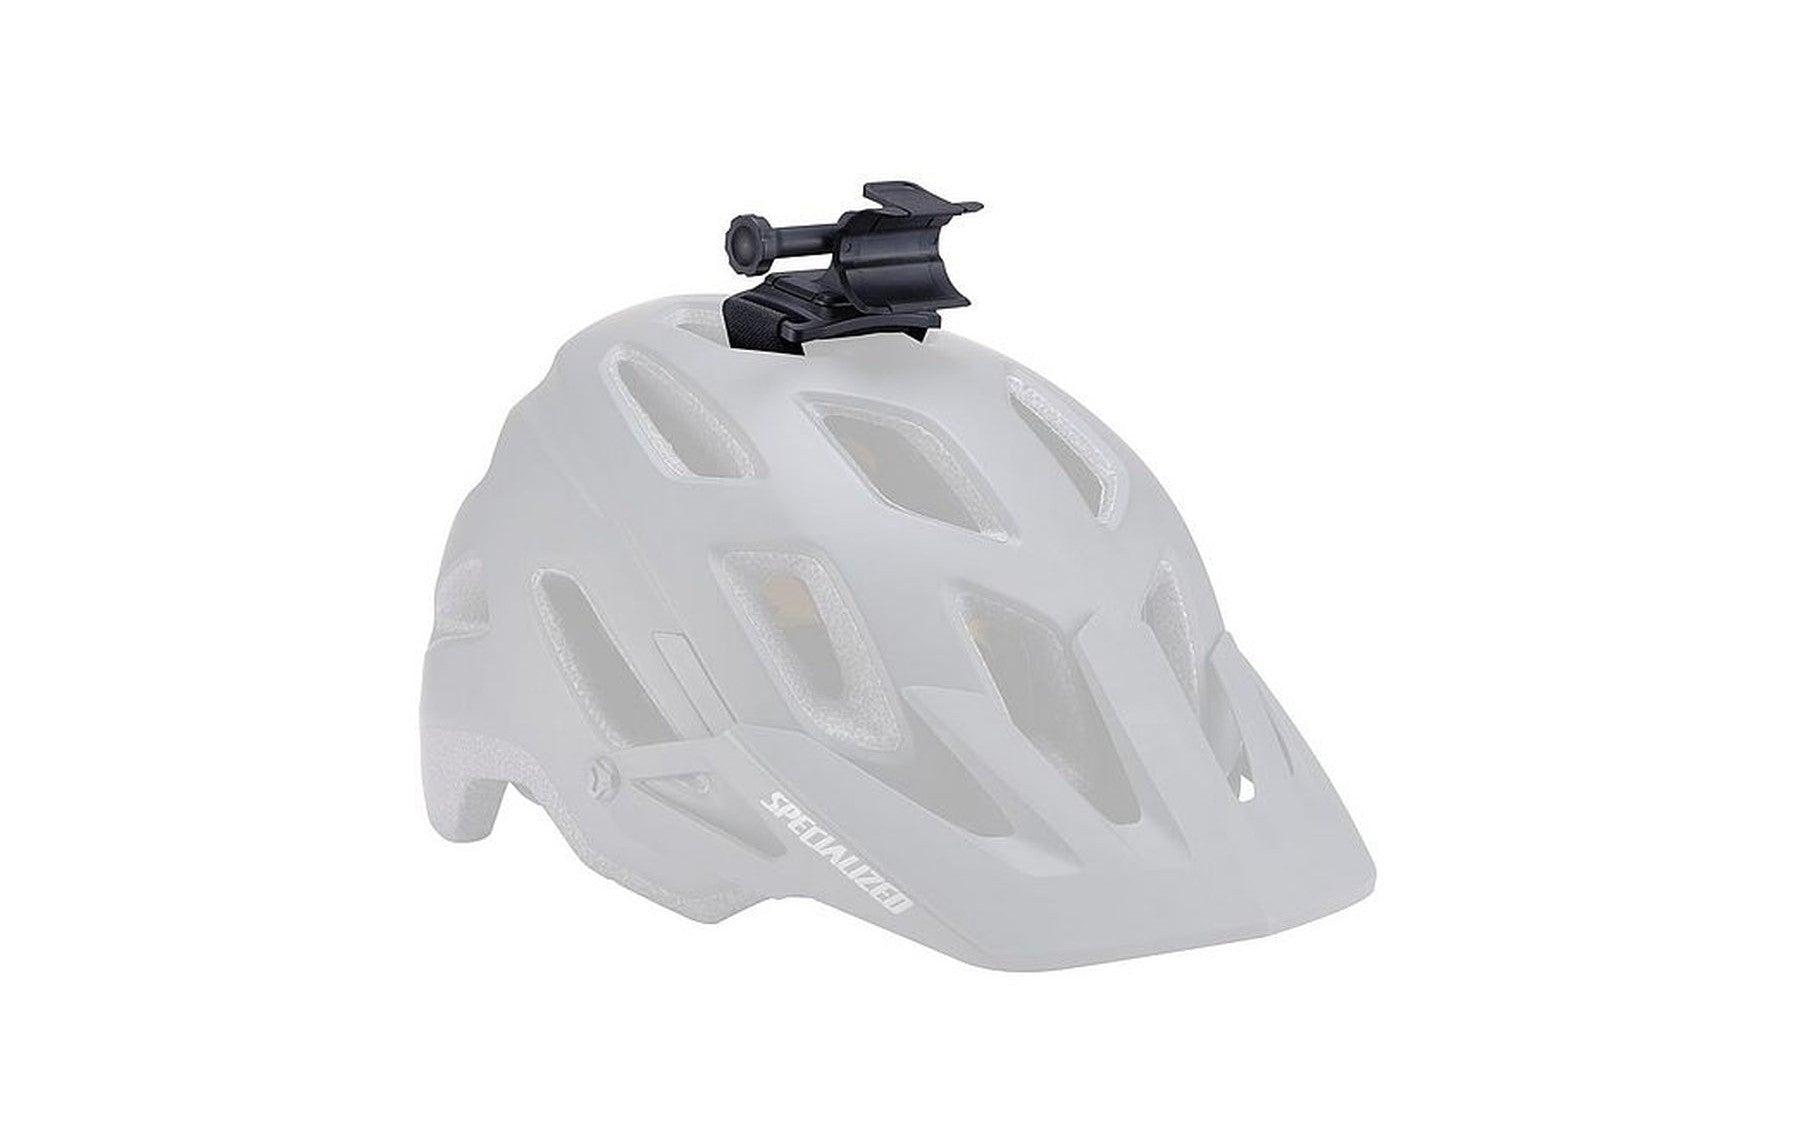 Fluxª 900/1200 Headlight Helmet Mount-Specialized